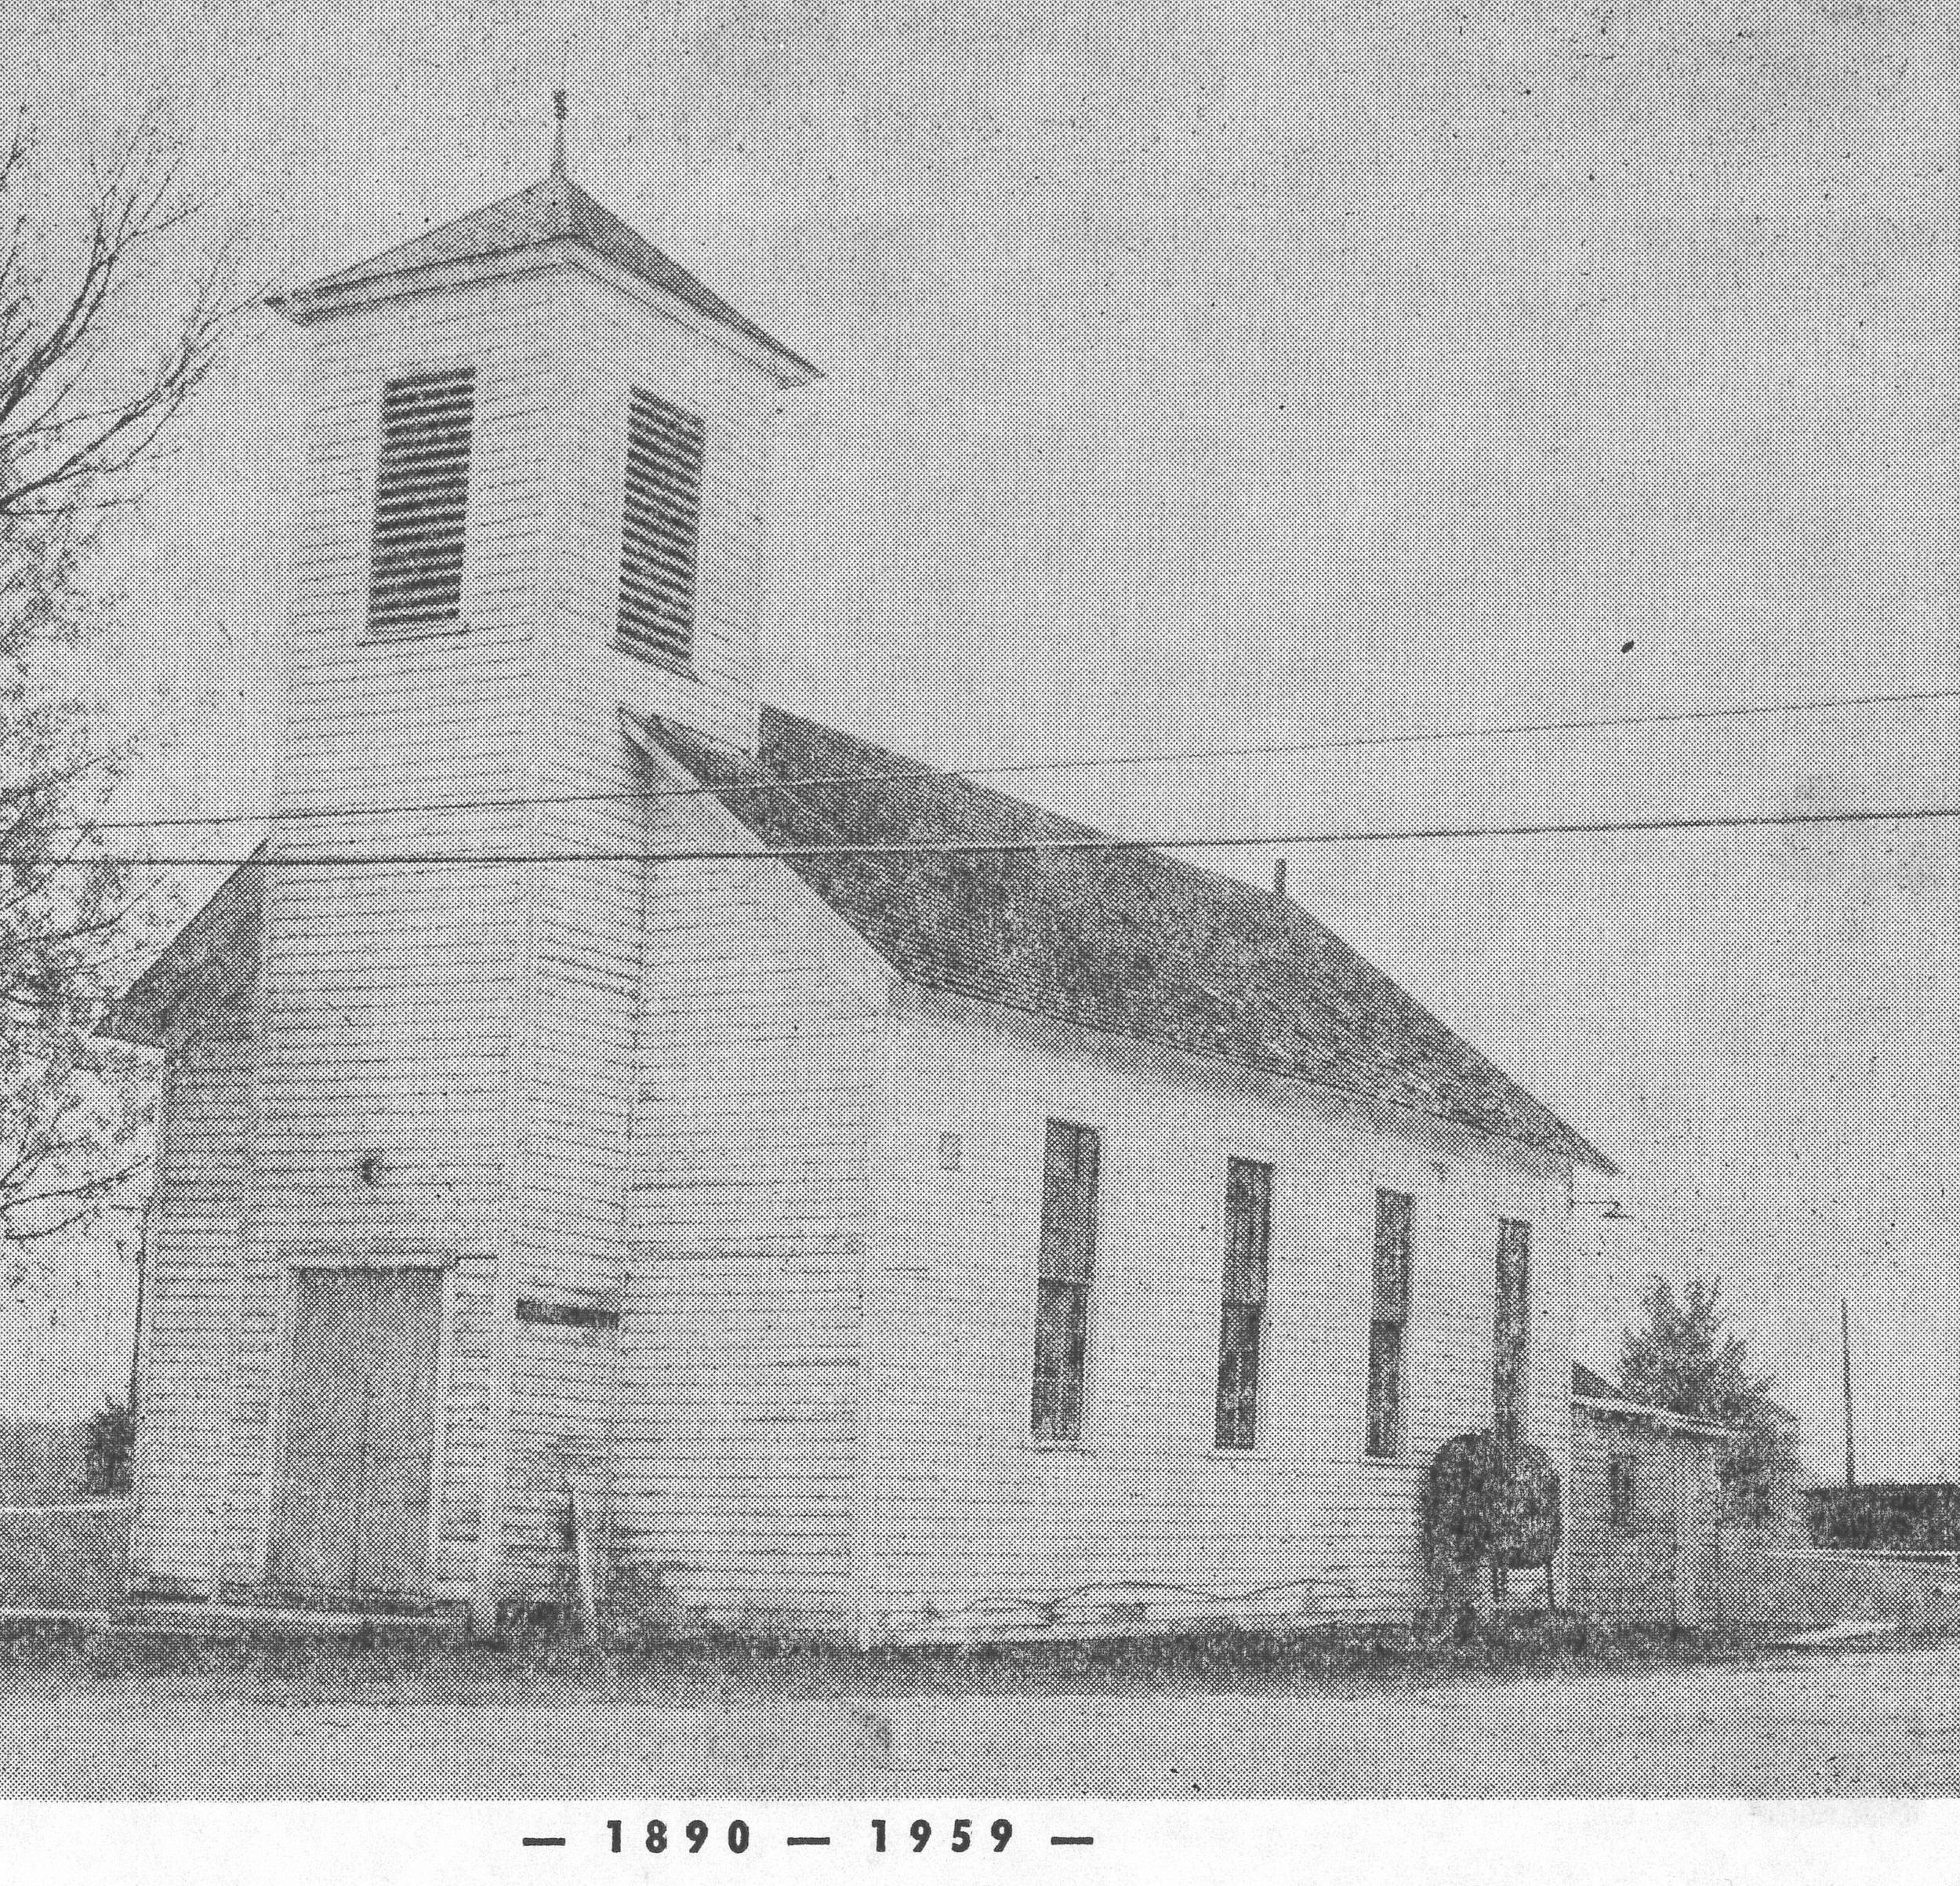 First Church Building 1890 - 1959